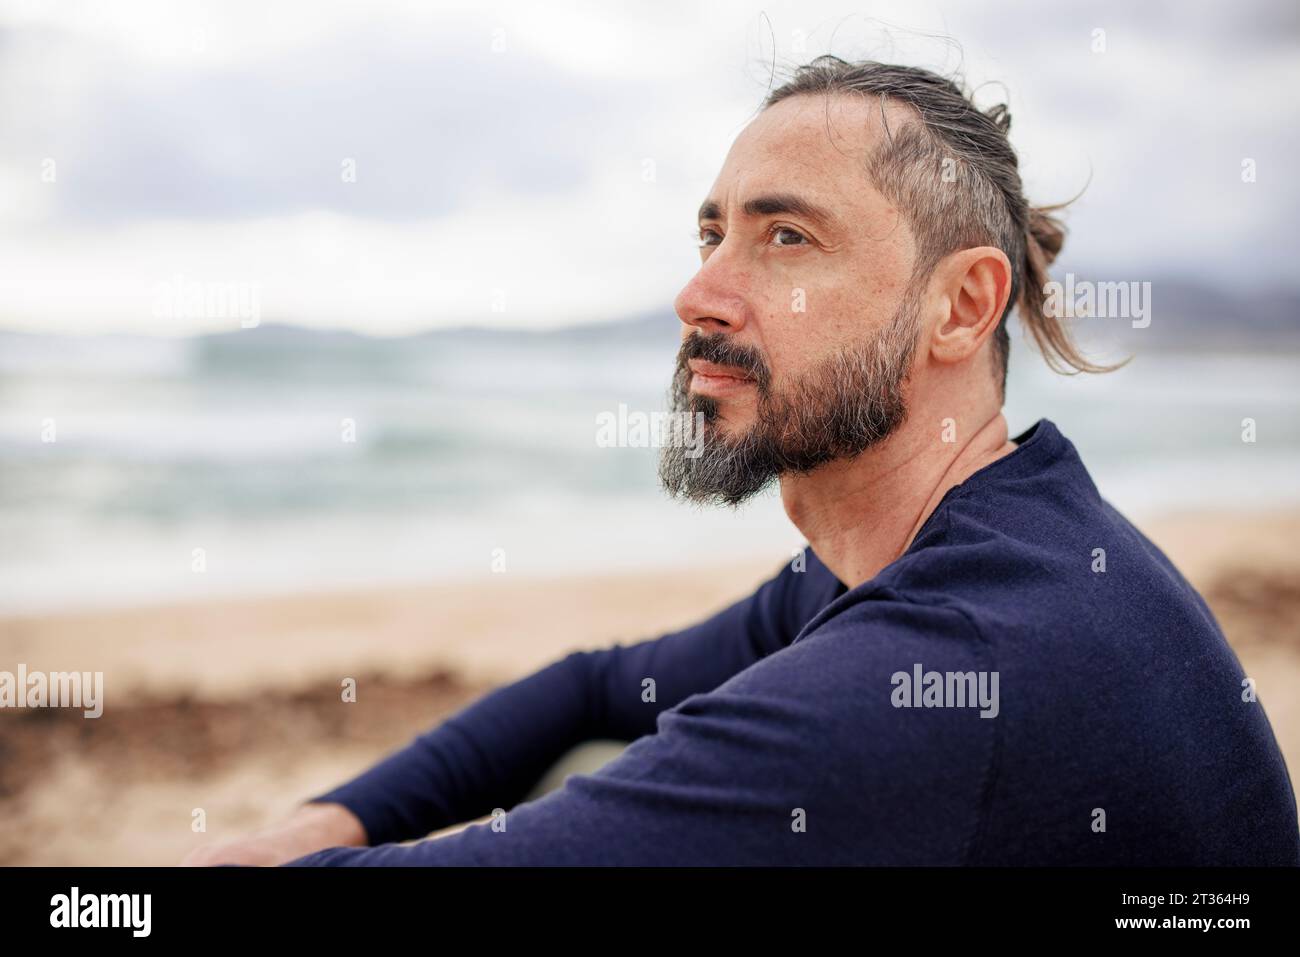 Contemplative man wearing blue T-shirt at beach Stock Photo